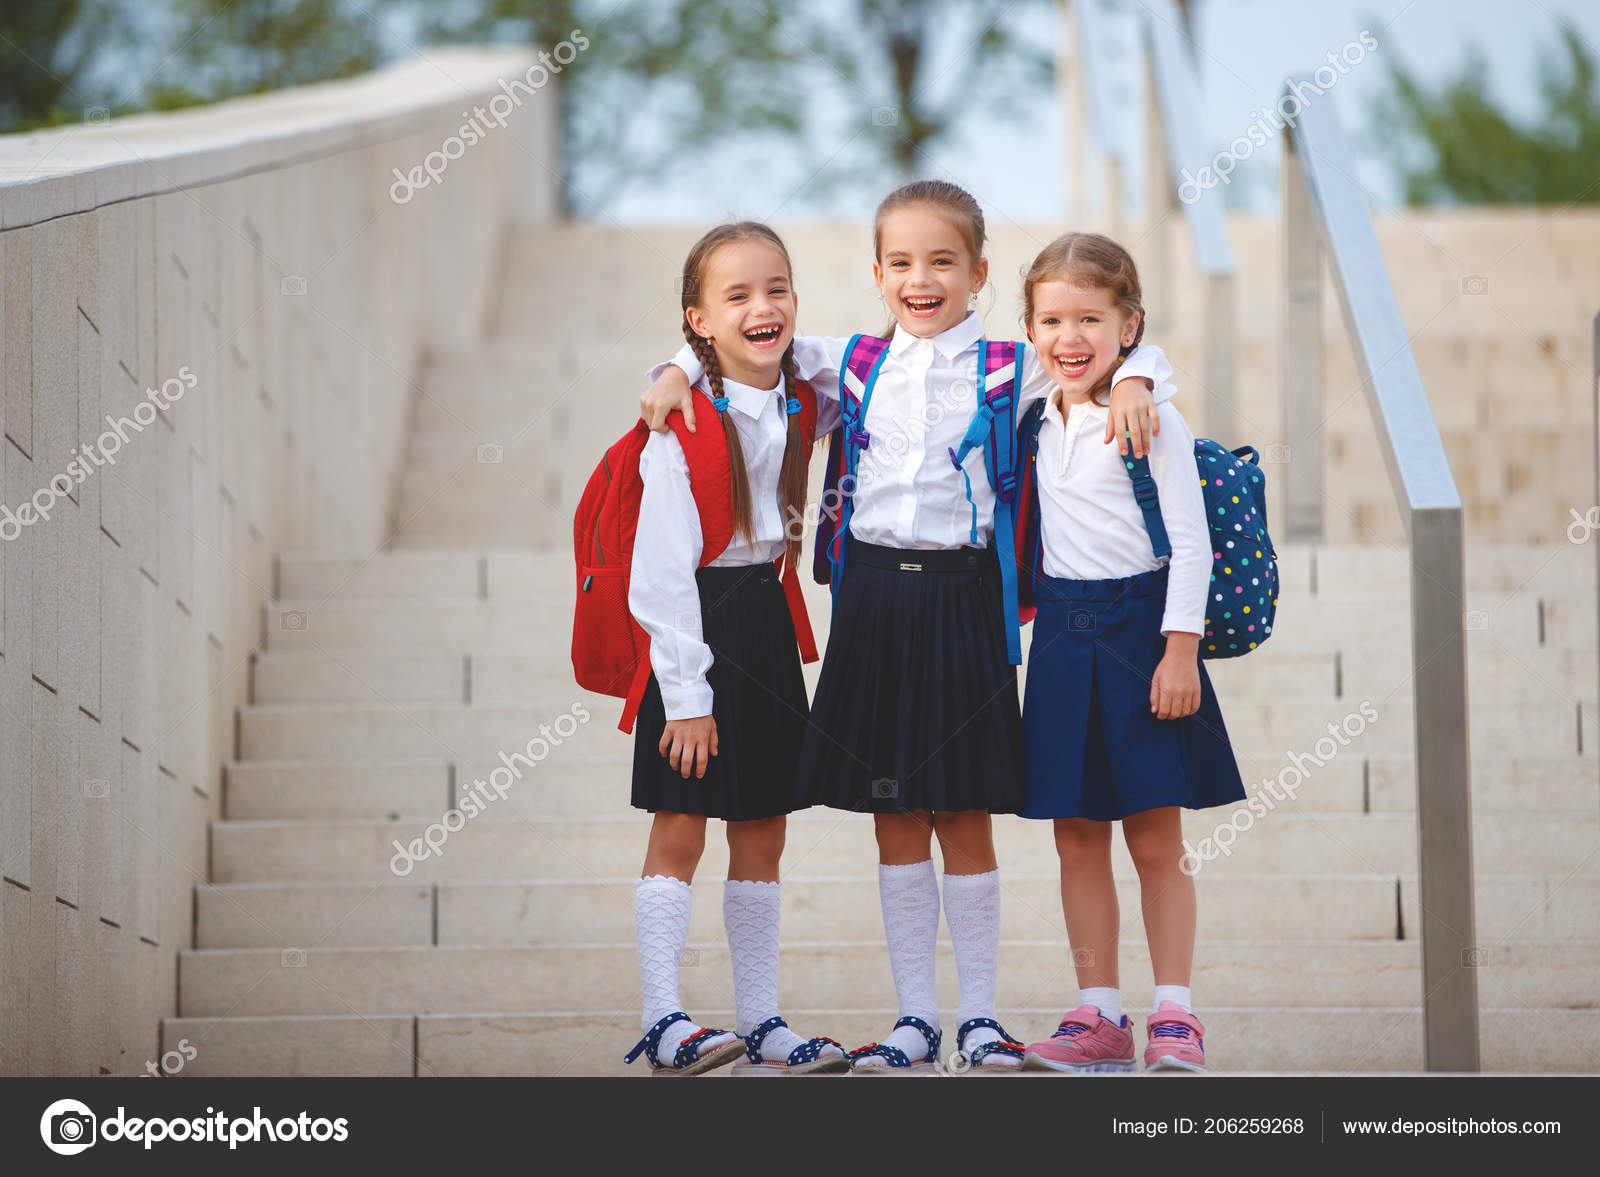 School Age Girls